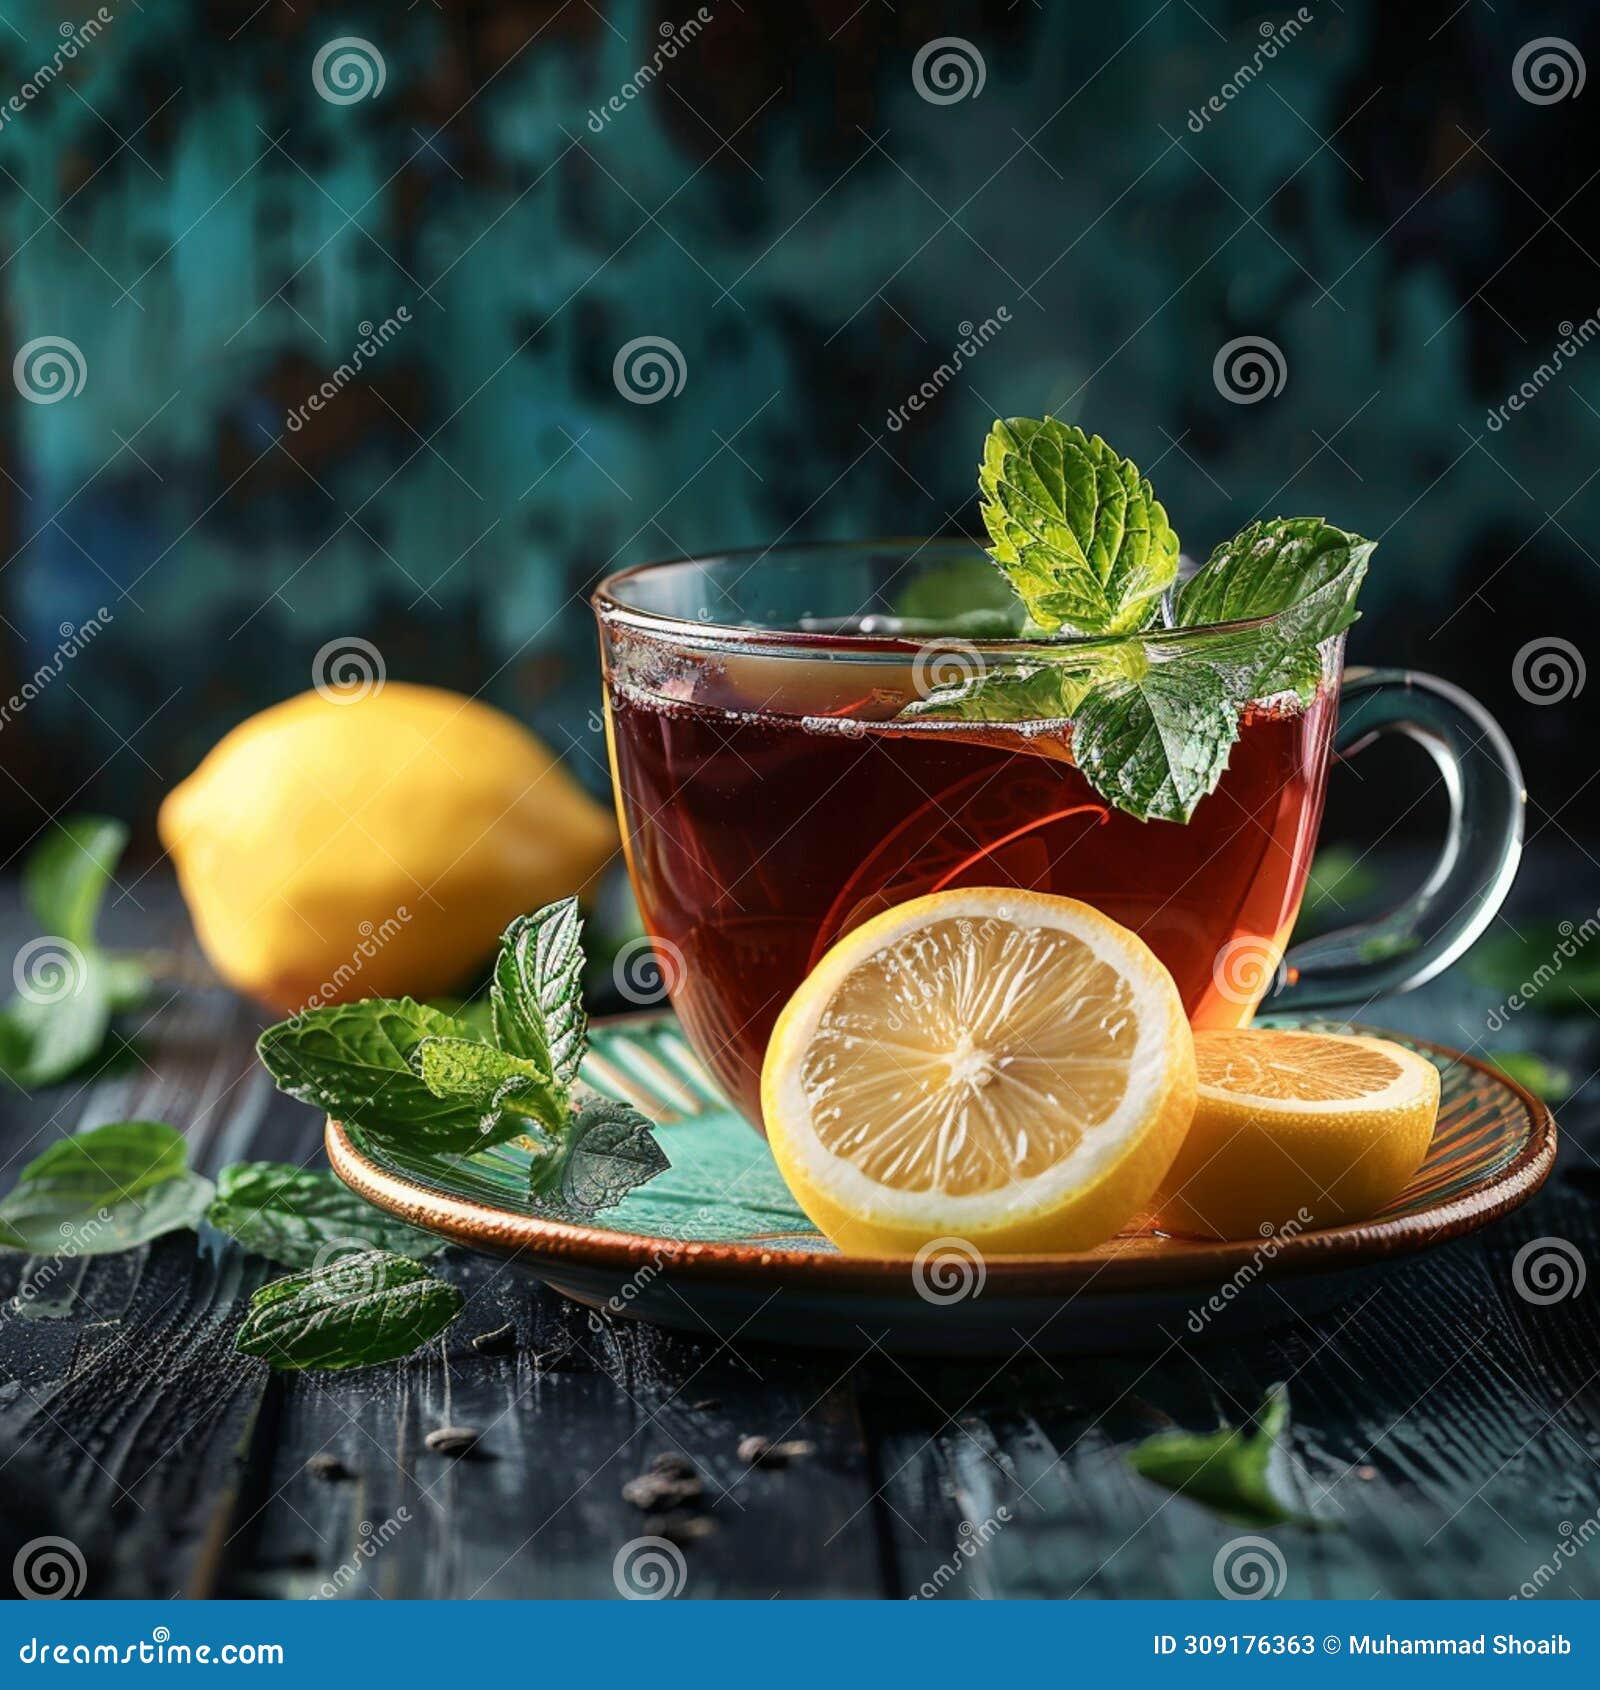 soothing tea presentation mint, lemon adornments, against dark backdrop